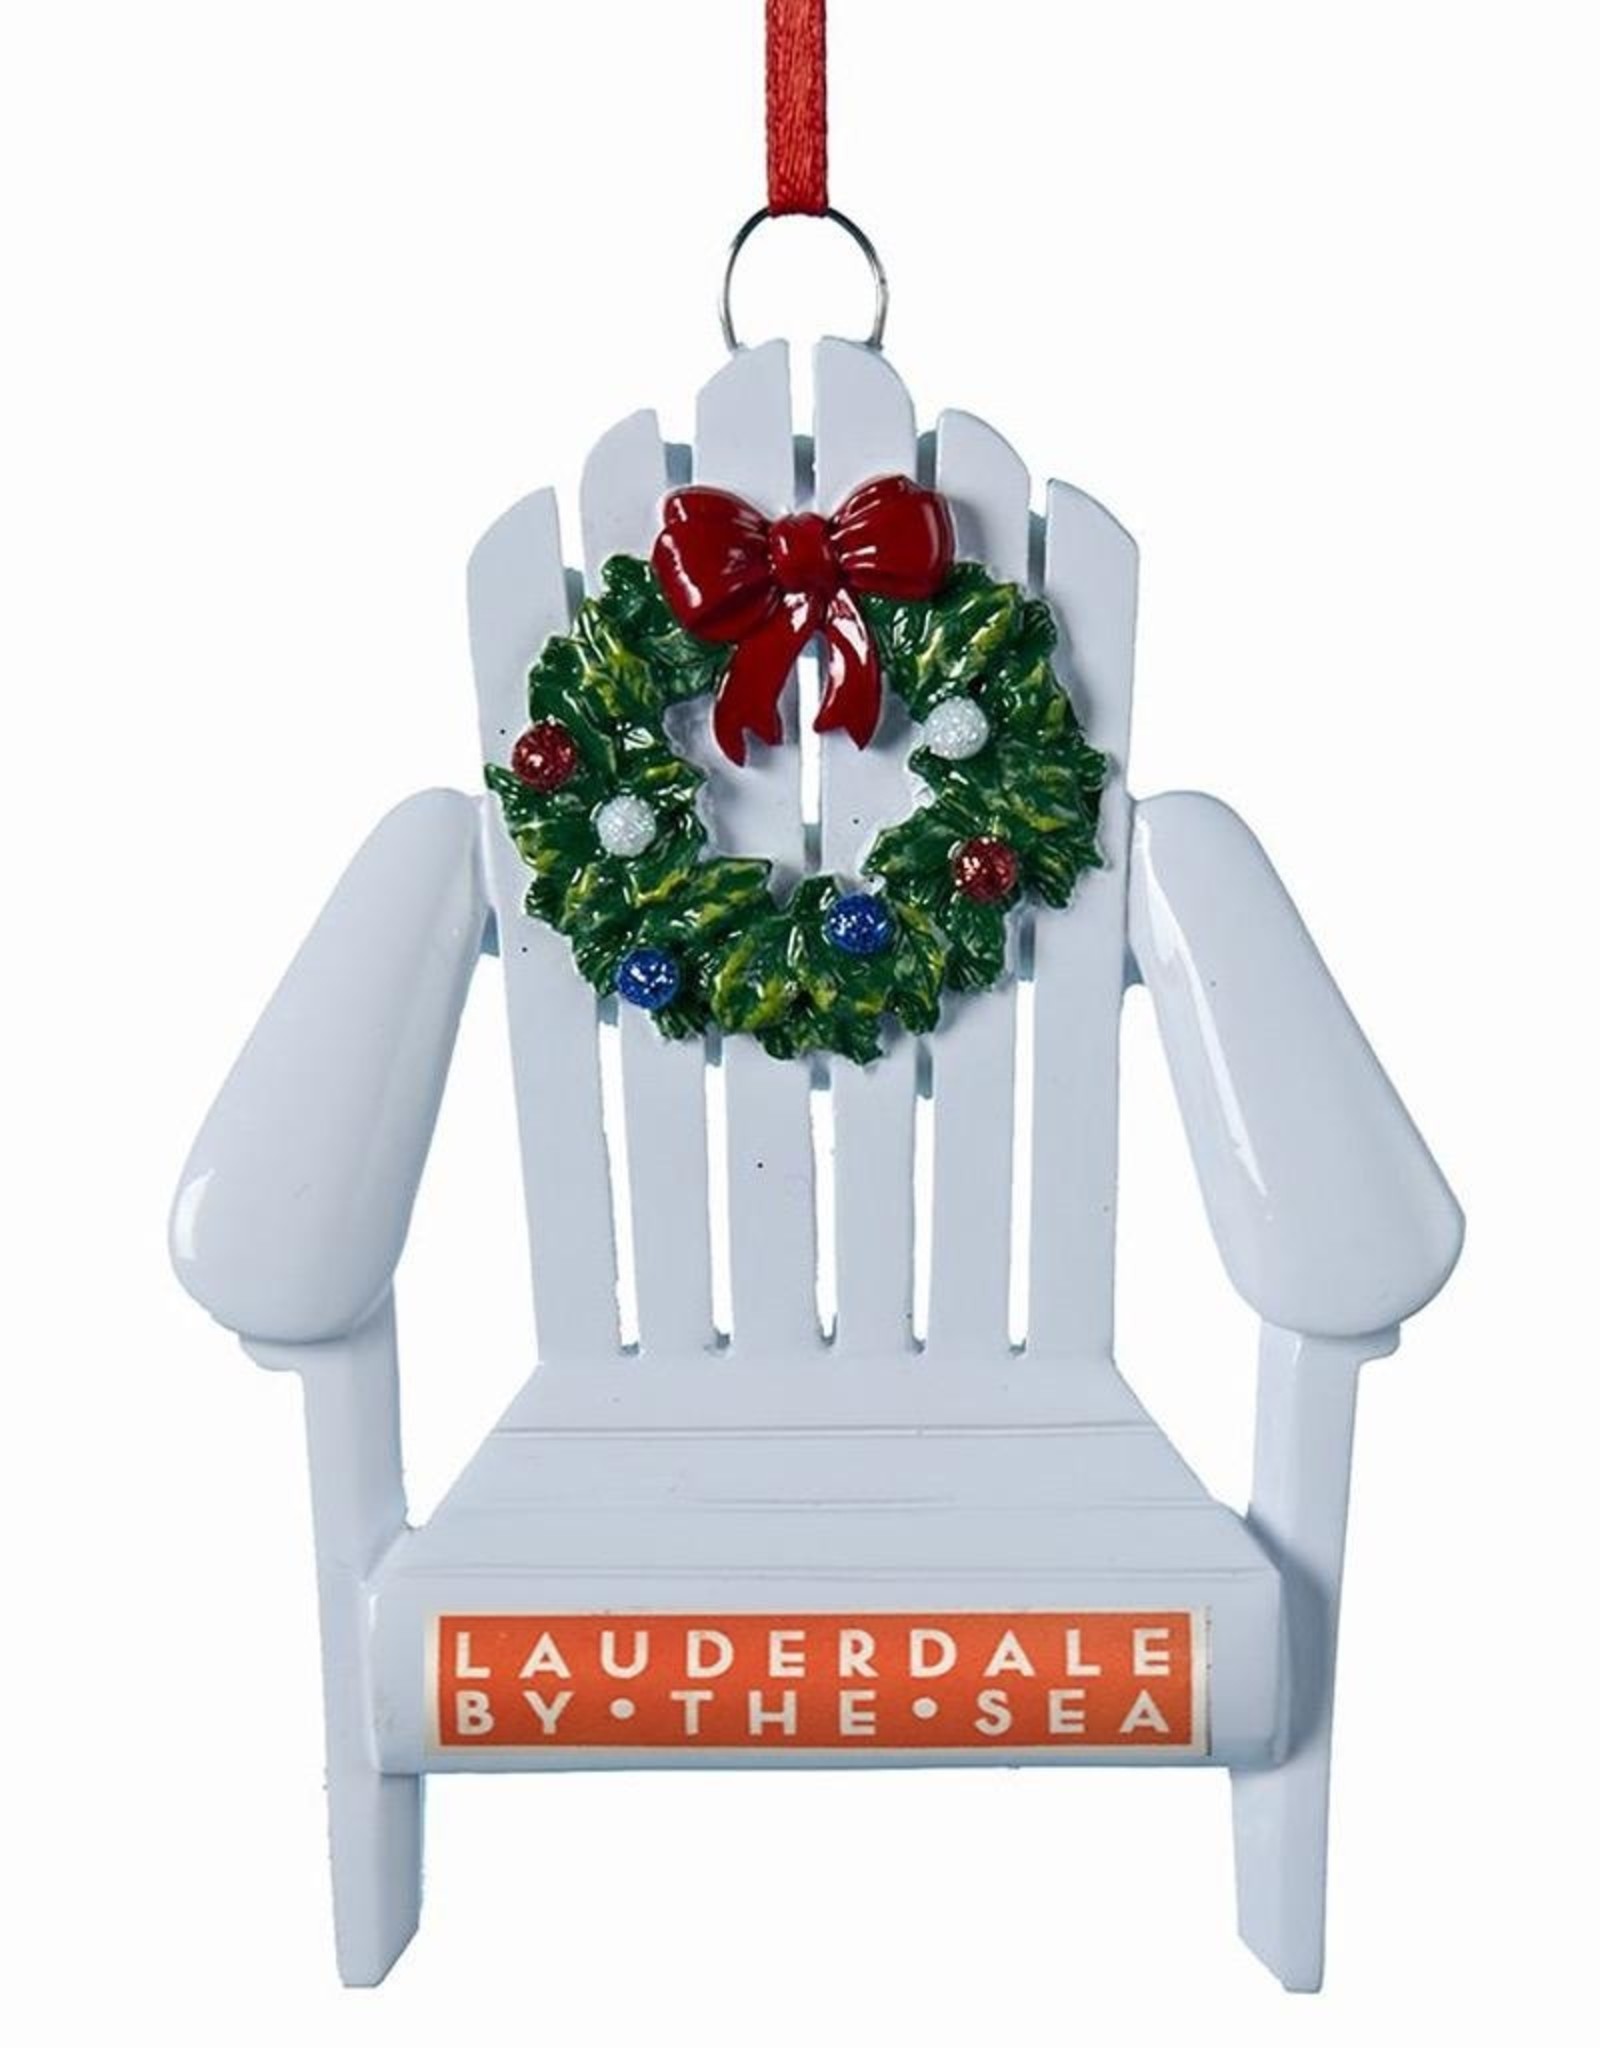 Kurt Adler Lauderdale By The Sea Adirondack Chair Souvenir Ornament